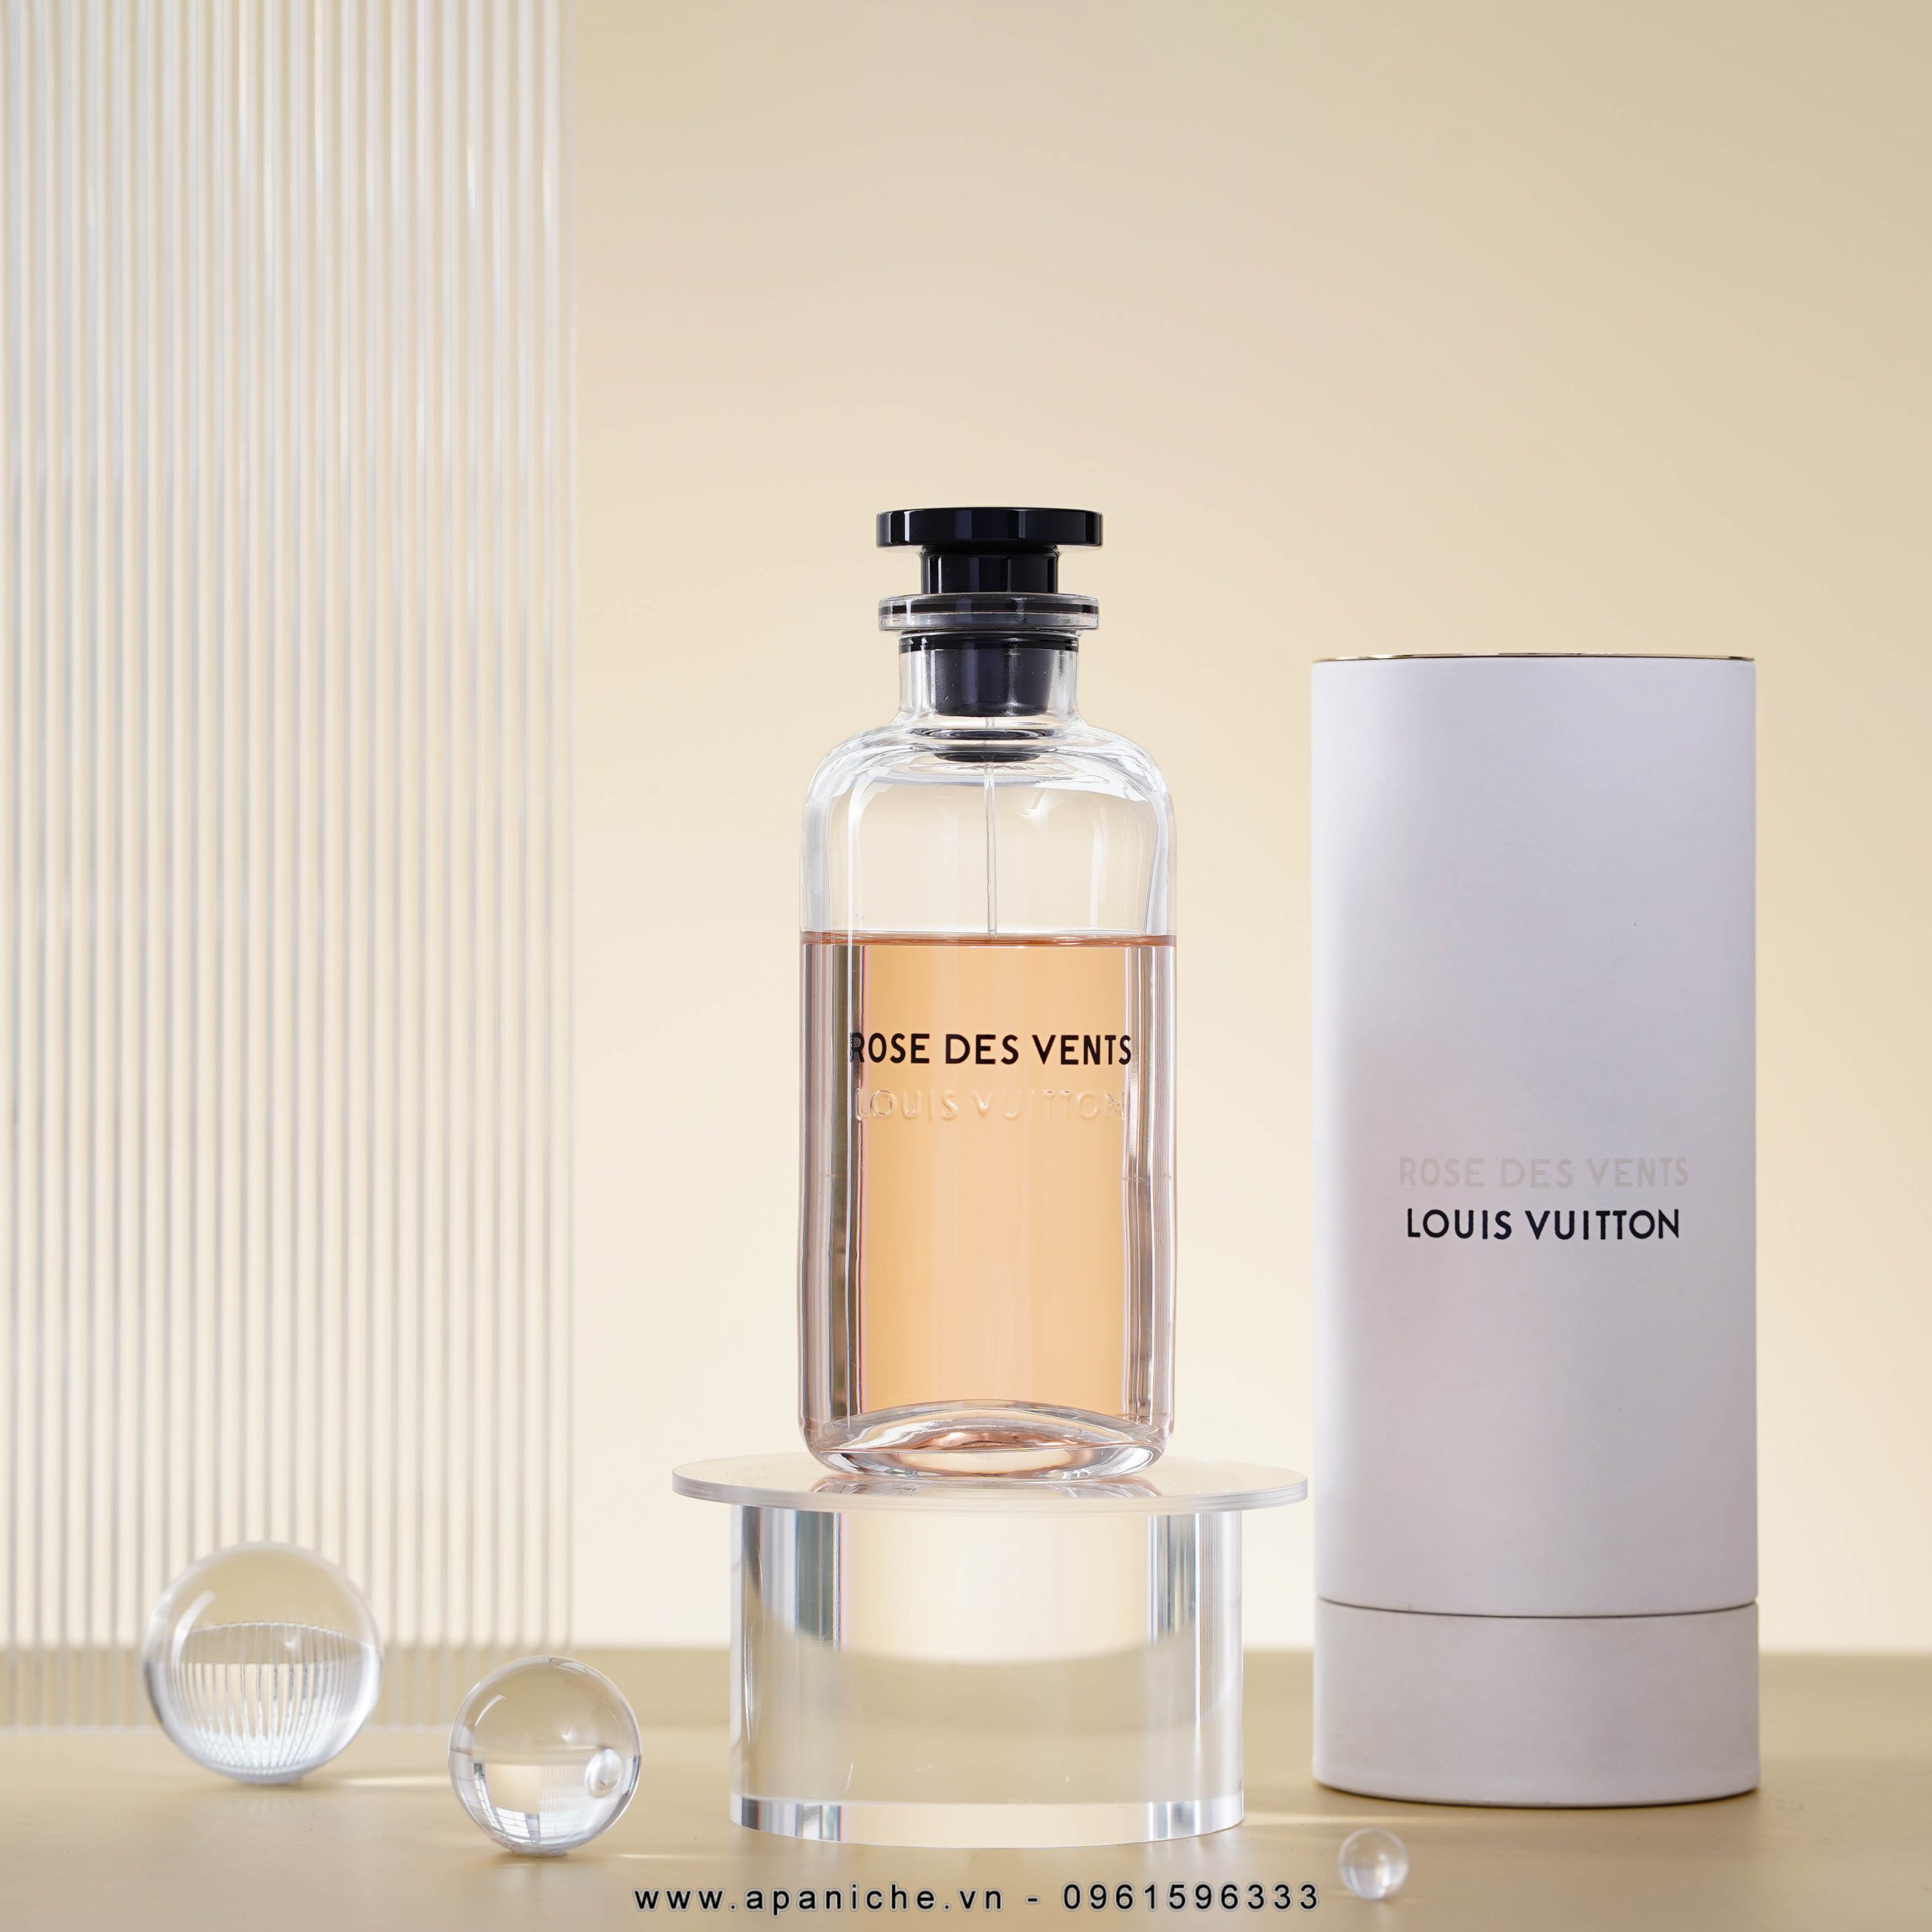 Louis Vuitton ROSE DES VENTS edp 100ml  Discounted Perfume House